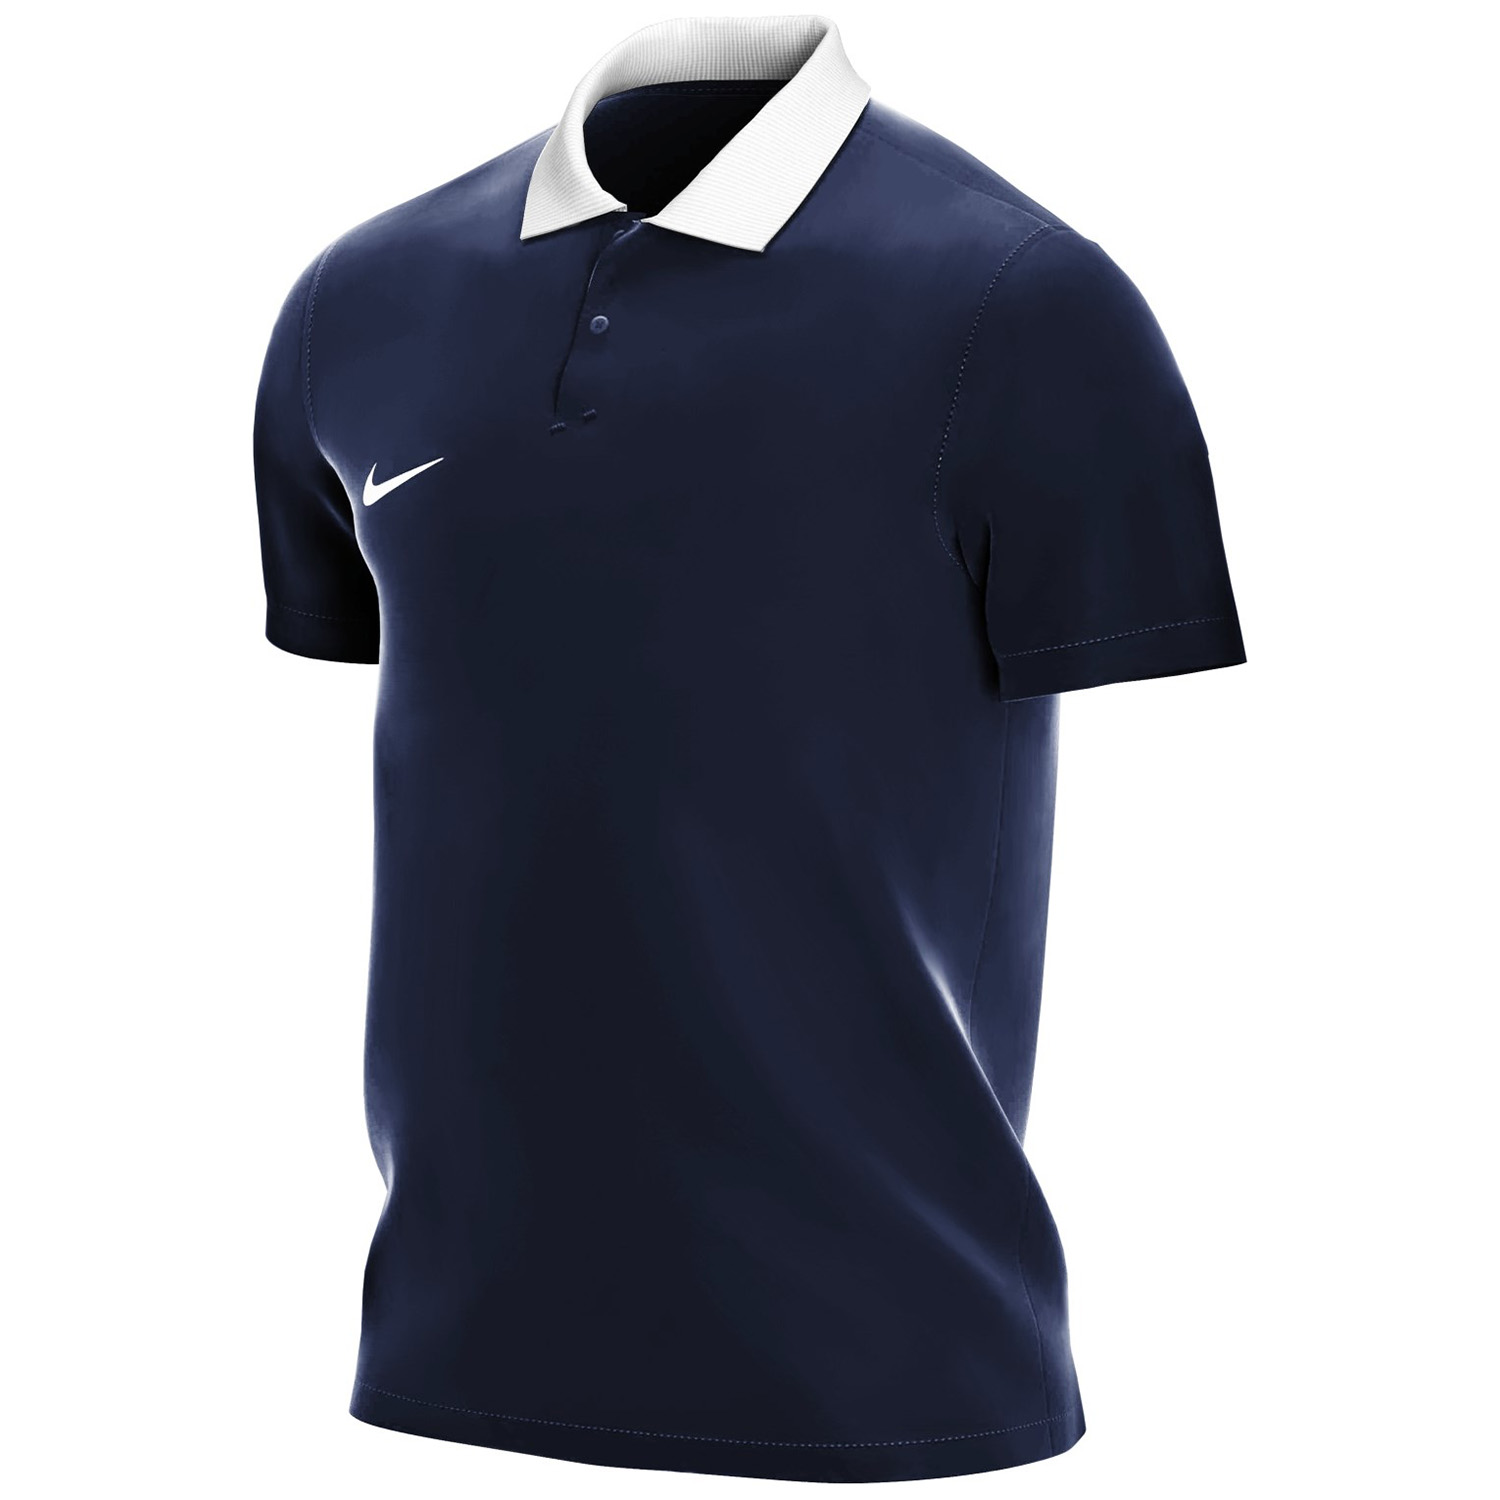 Nike Herren Poloshirt TEAM CLUB 20 Dri-FIT blau/weiss CW6933 451